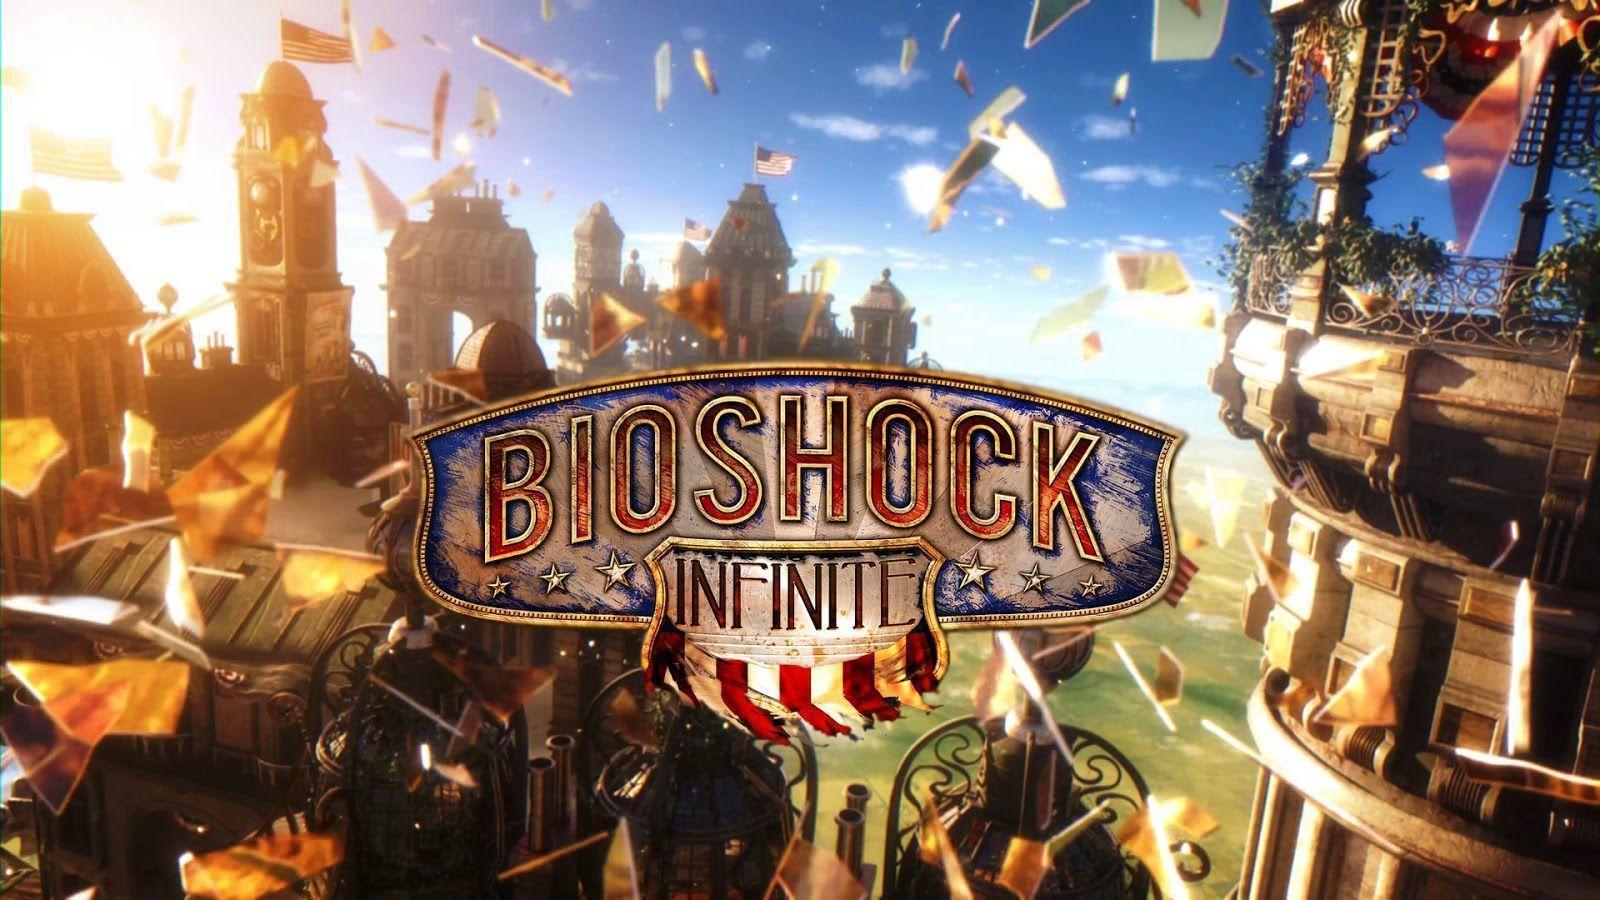 Get The Look: BioShock Infinite. &